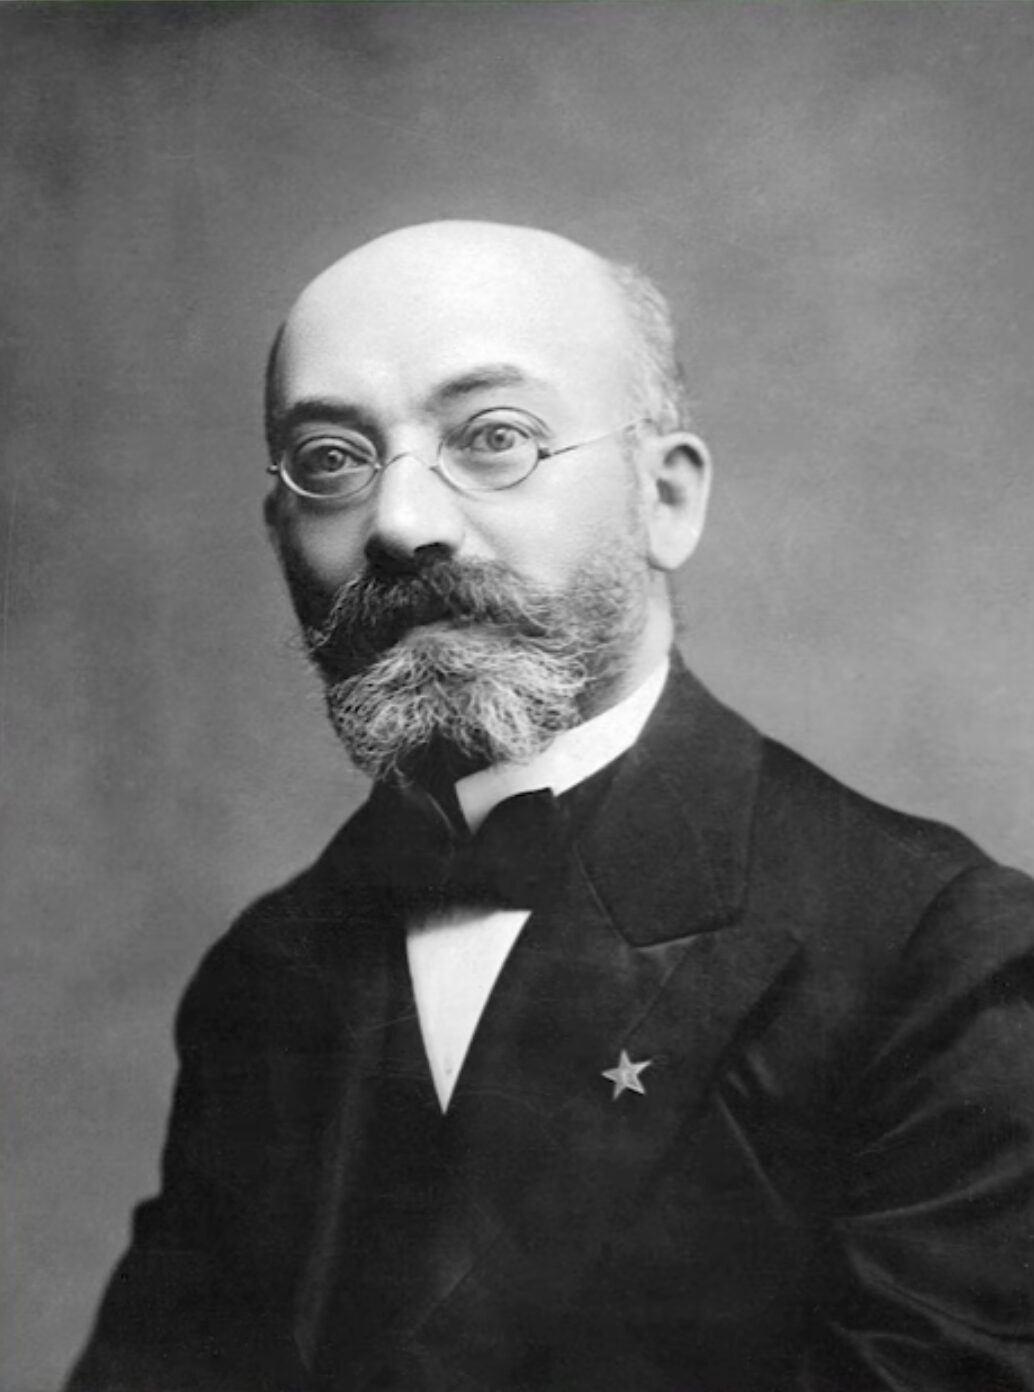 Dr. Ludwik Lejzer Zamenhof